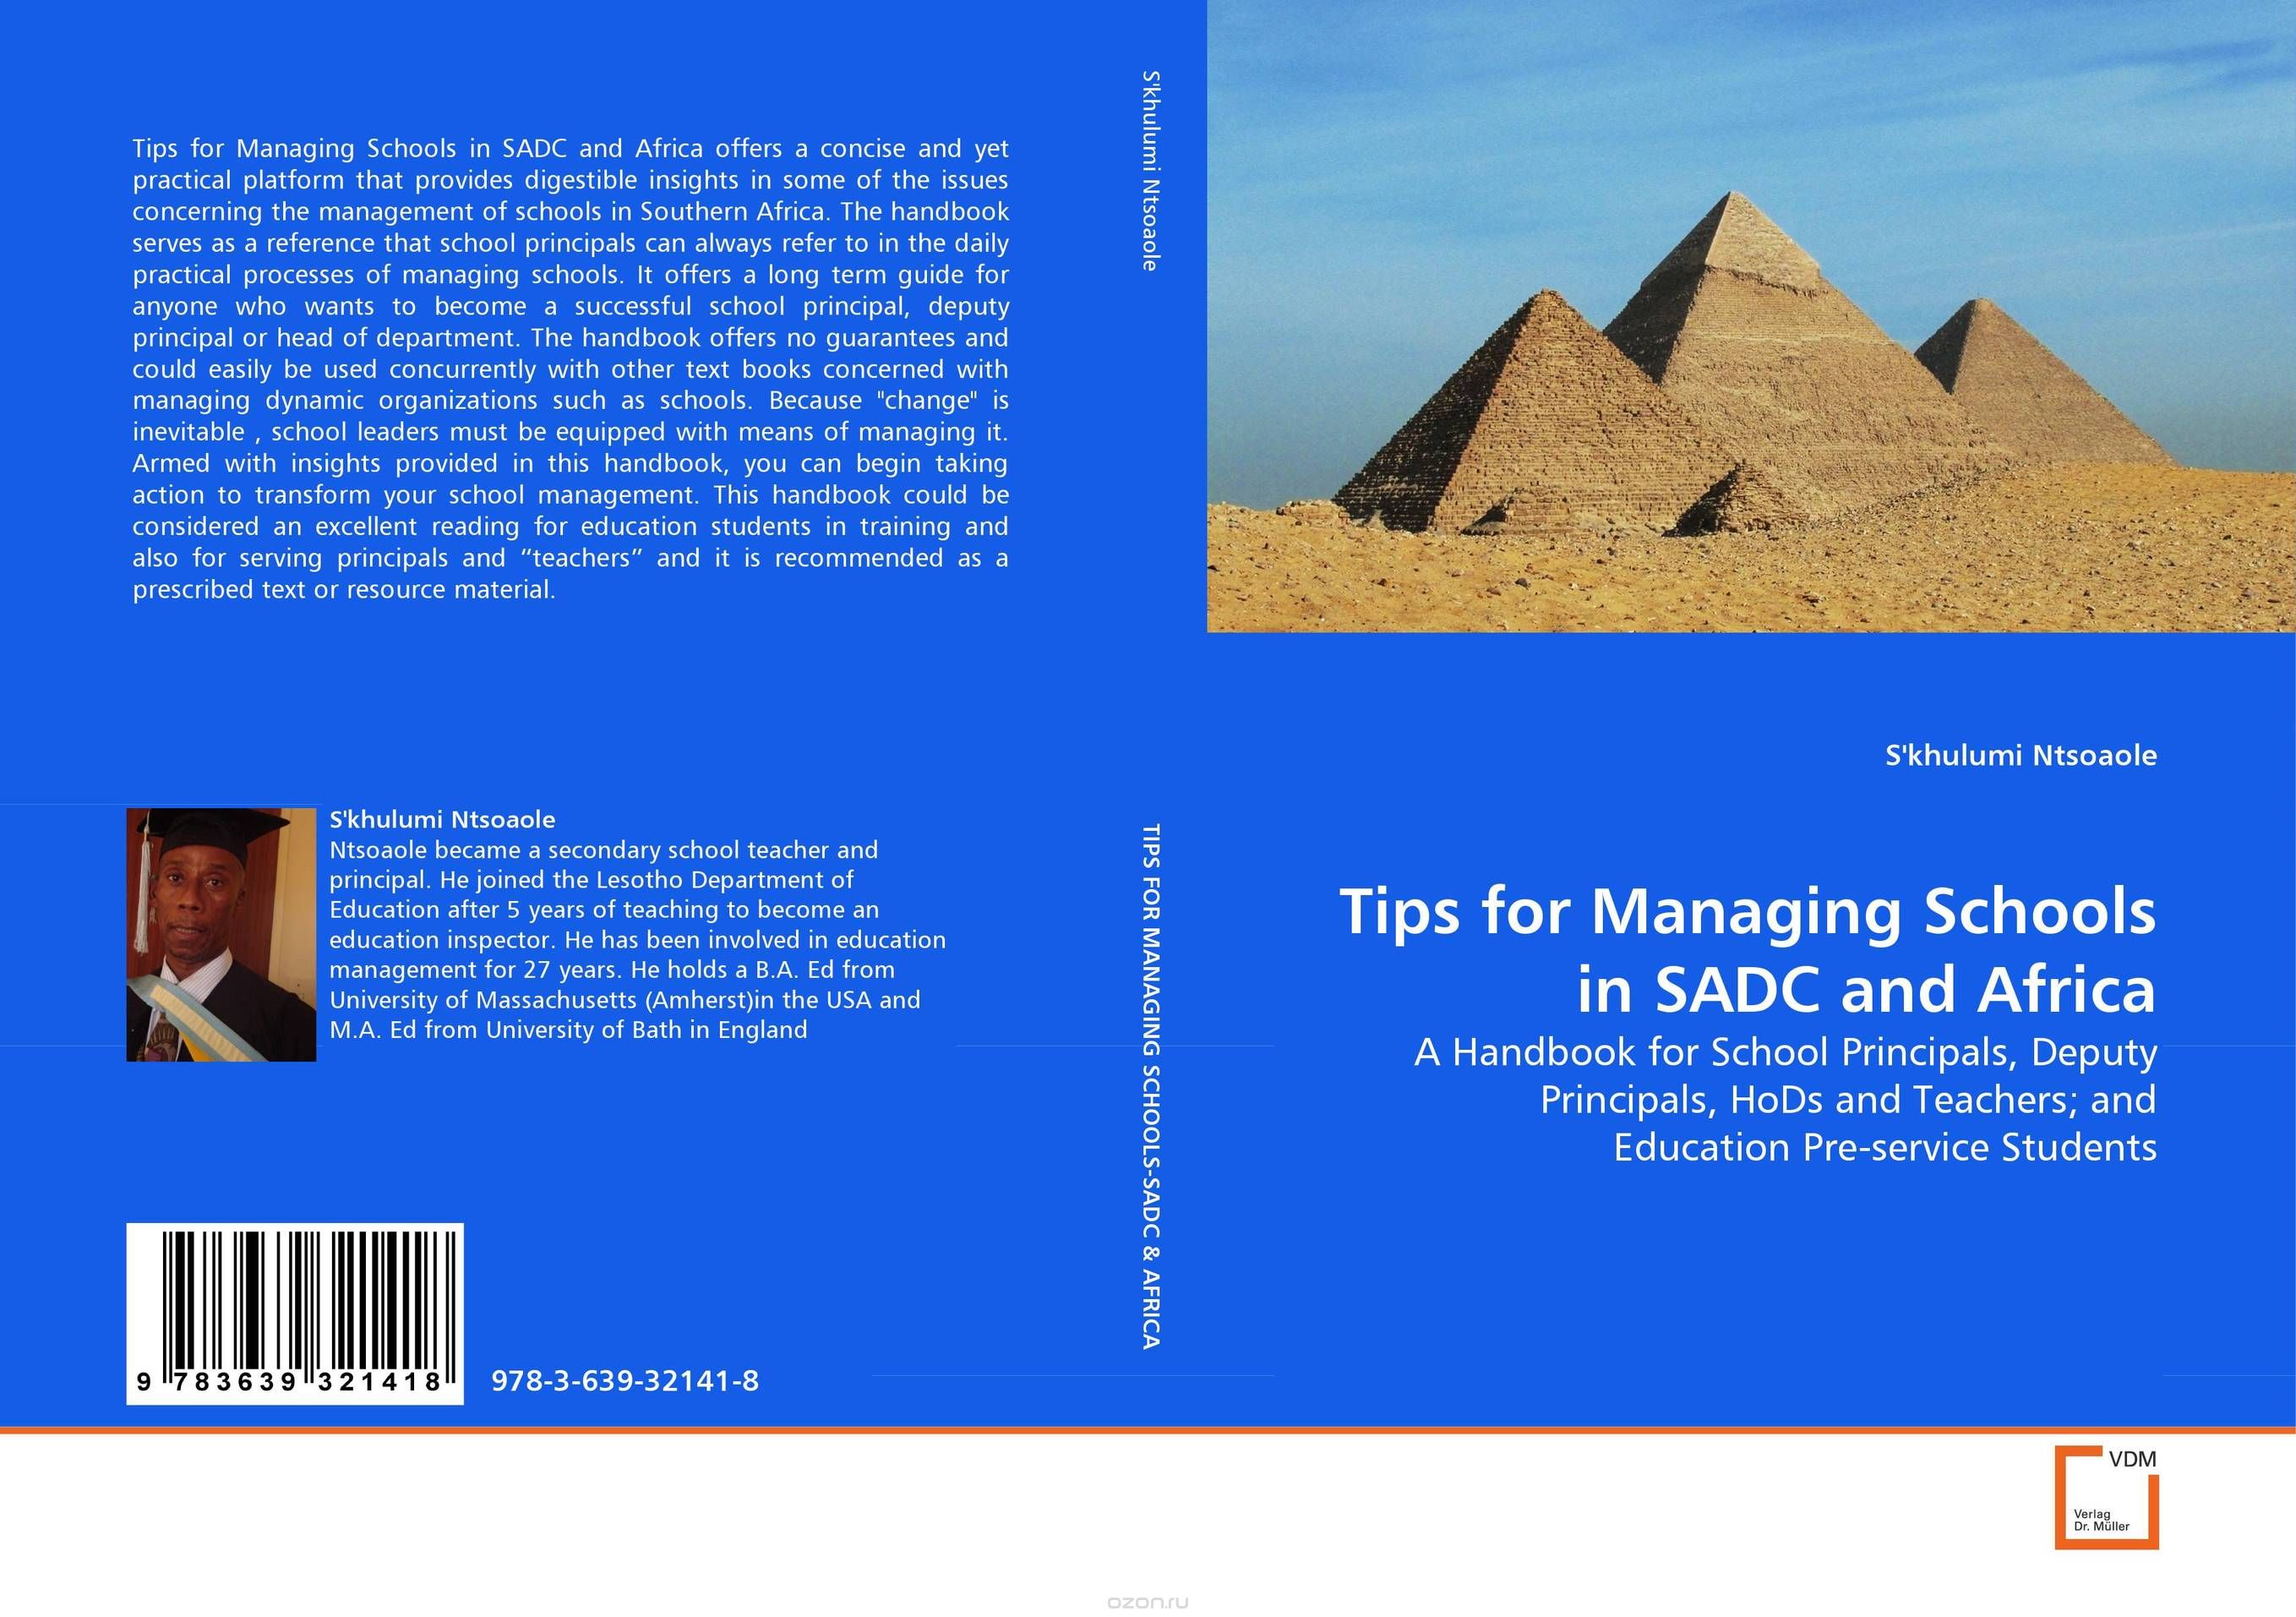 Скачать книгу "Tips for Managing Schools in SADC and Africa"